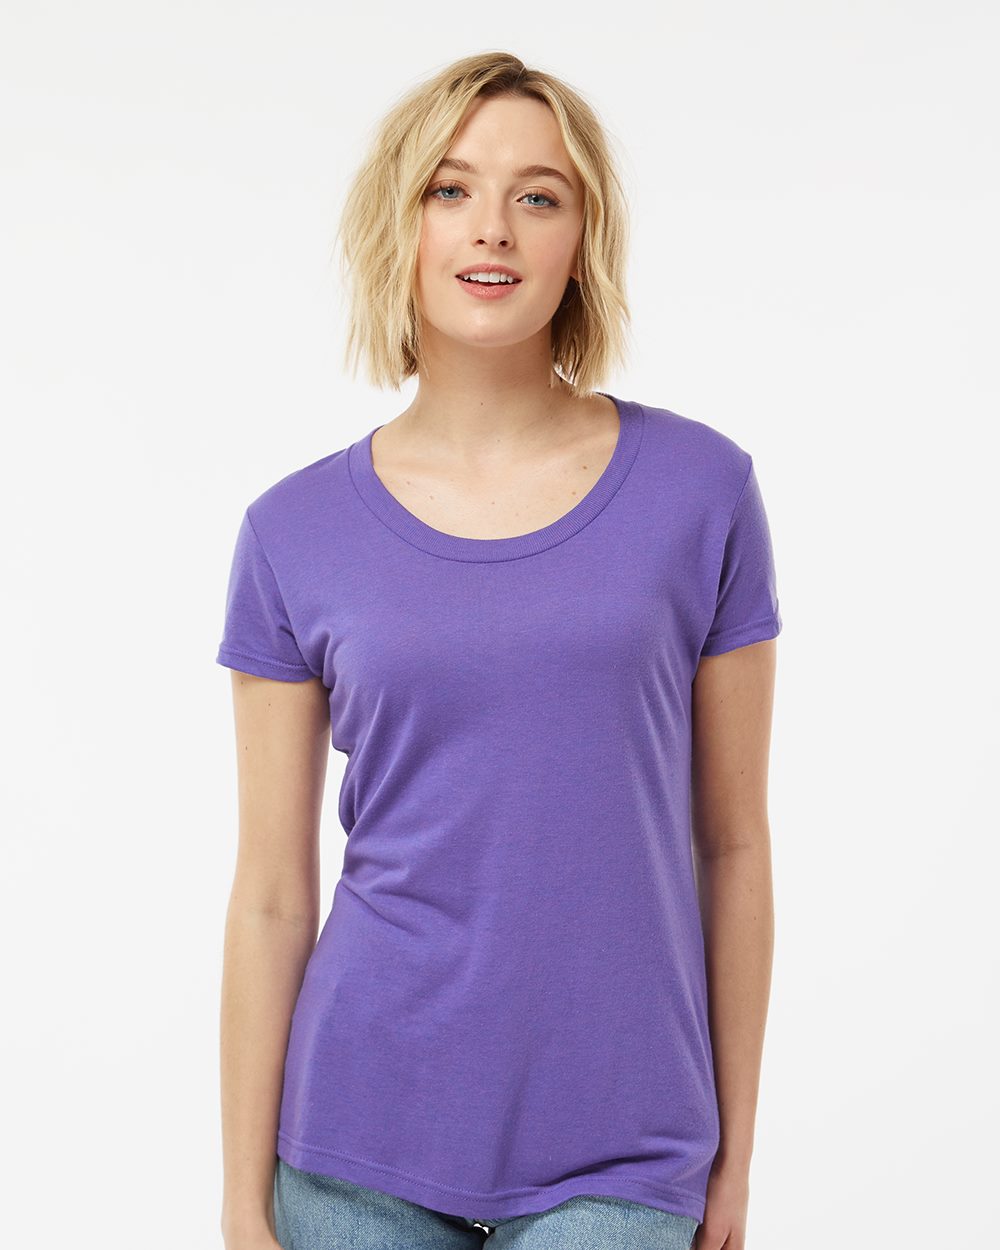 Tultex 253 - Women's Tri-Blend T-Shirt